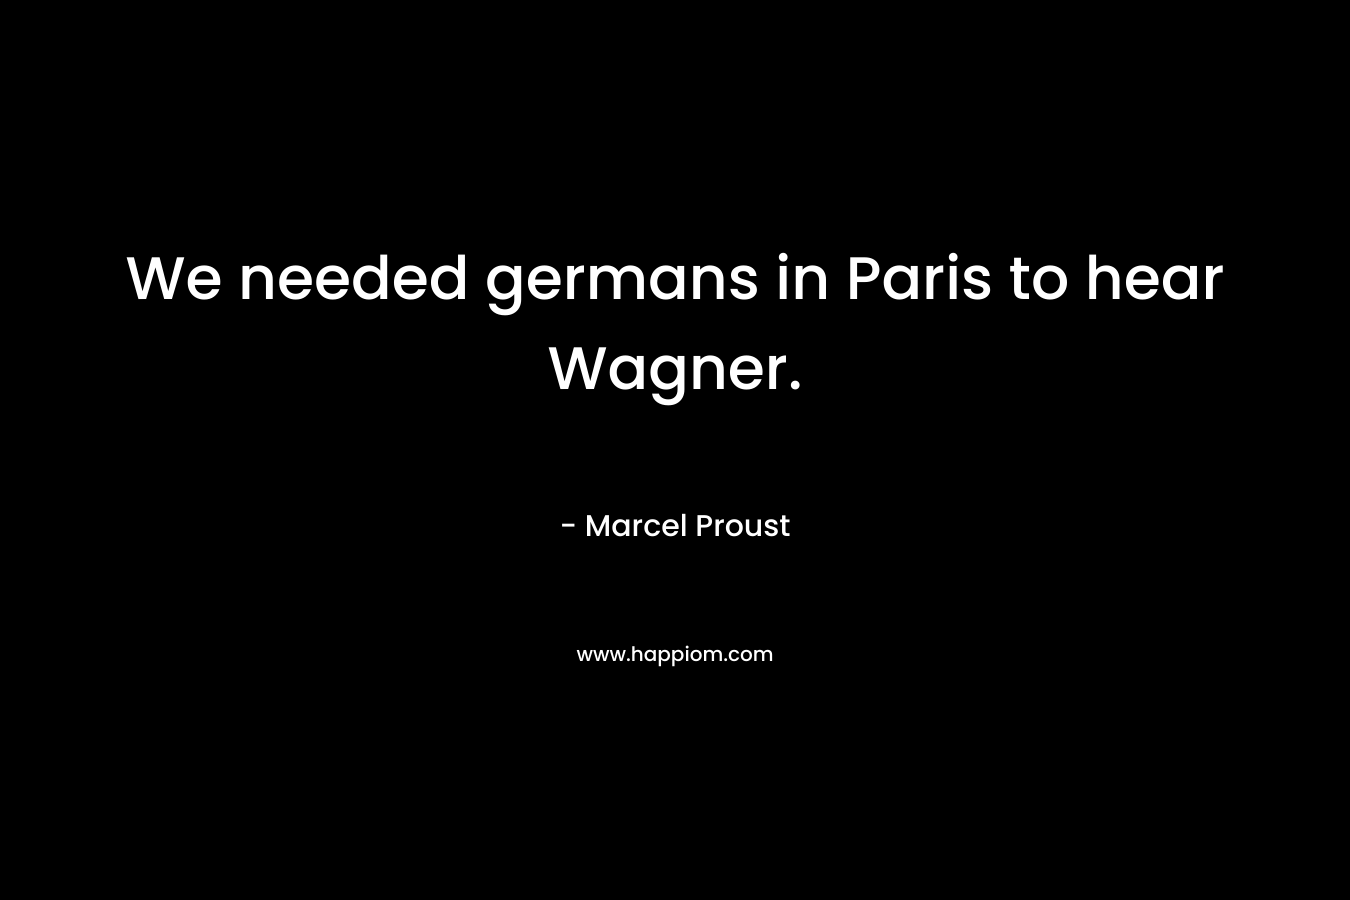 We needed germans in Paris to hear Wagner.